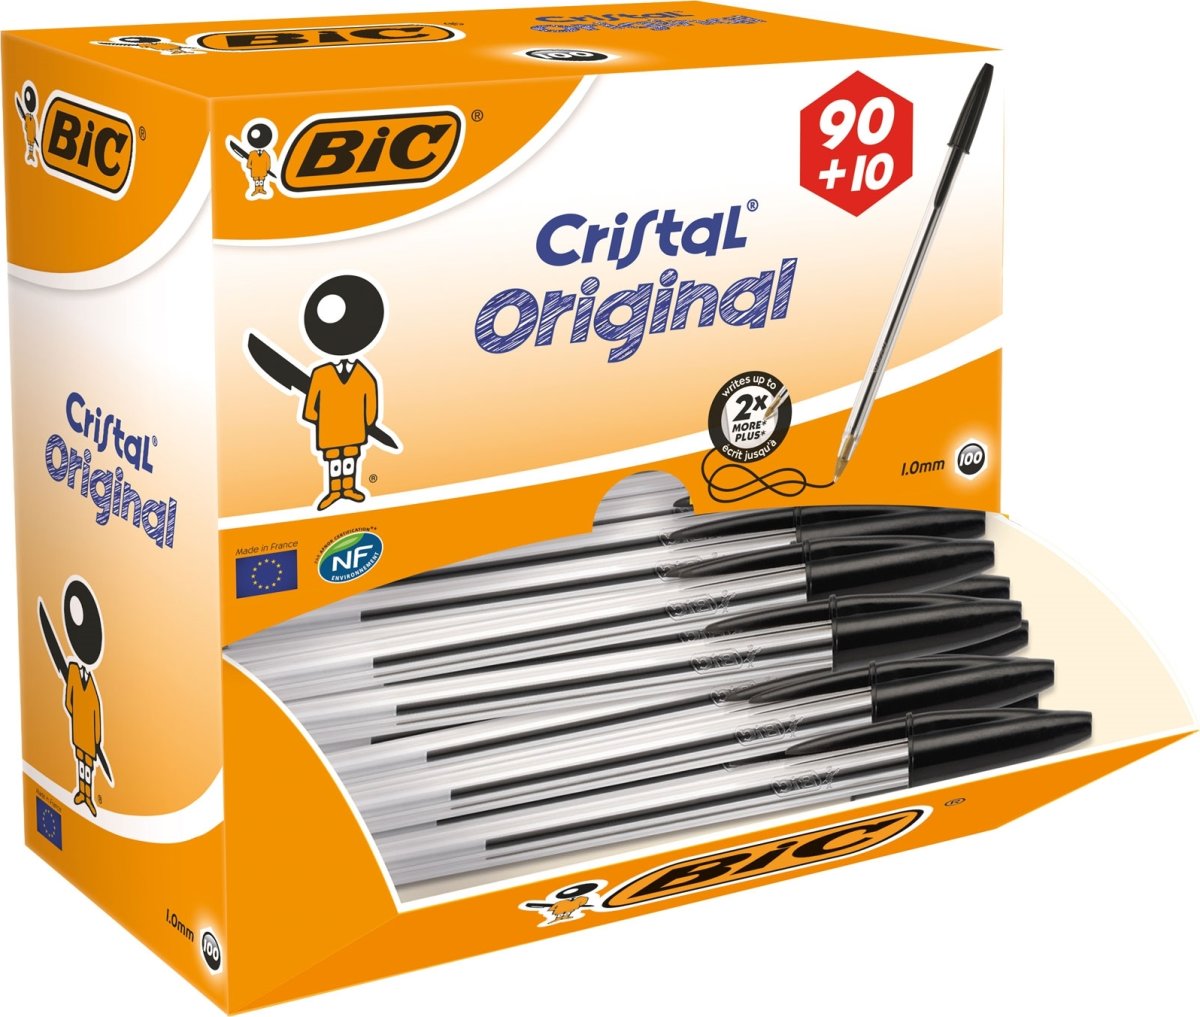 Bic Cristal kuglepen value pack, medium, sort